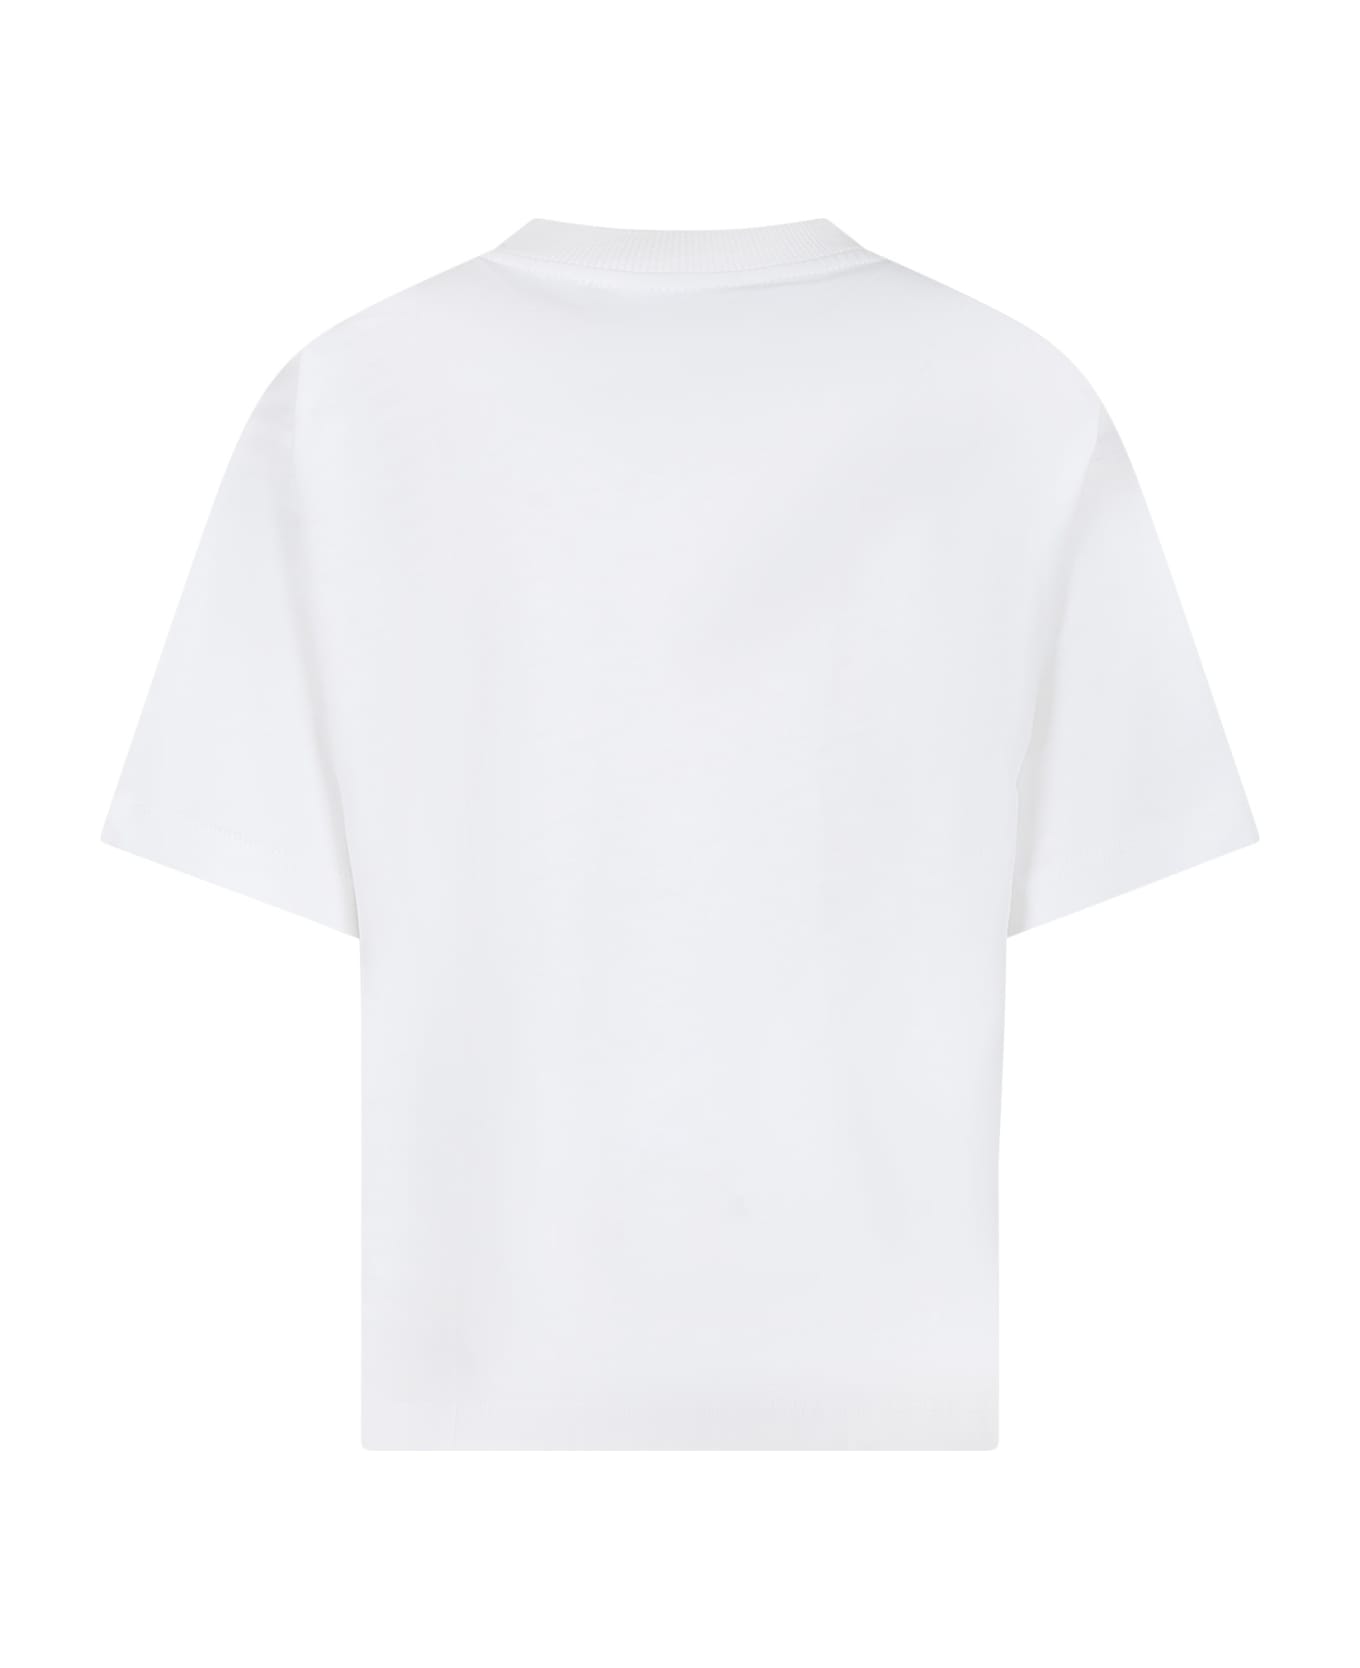 Emporio Armani White T-shirt For Girl With The Smurfs - White